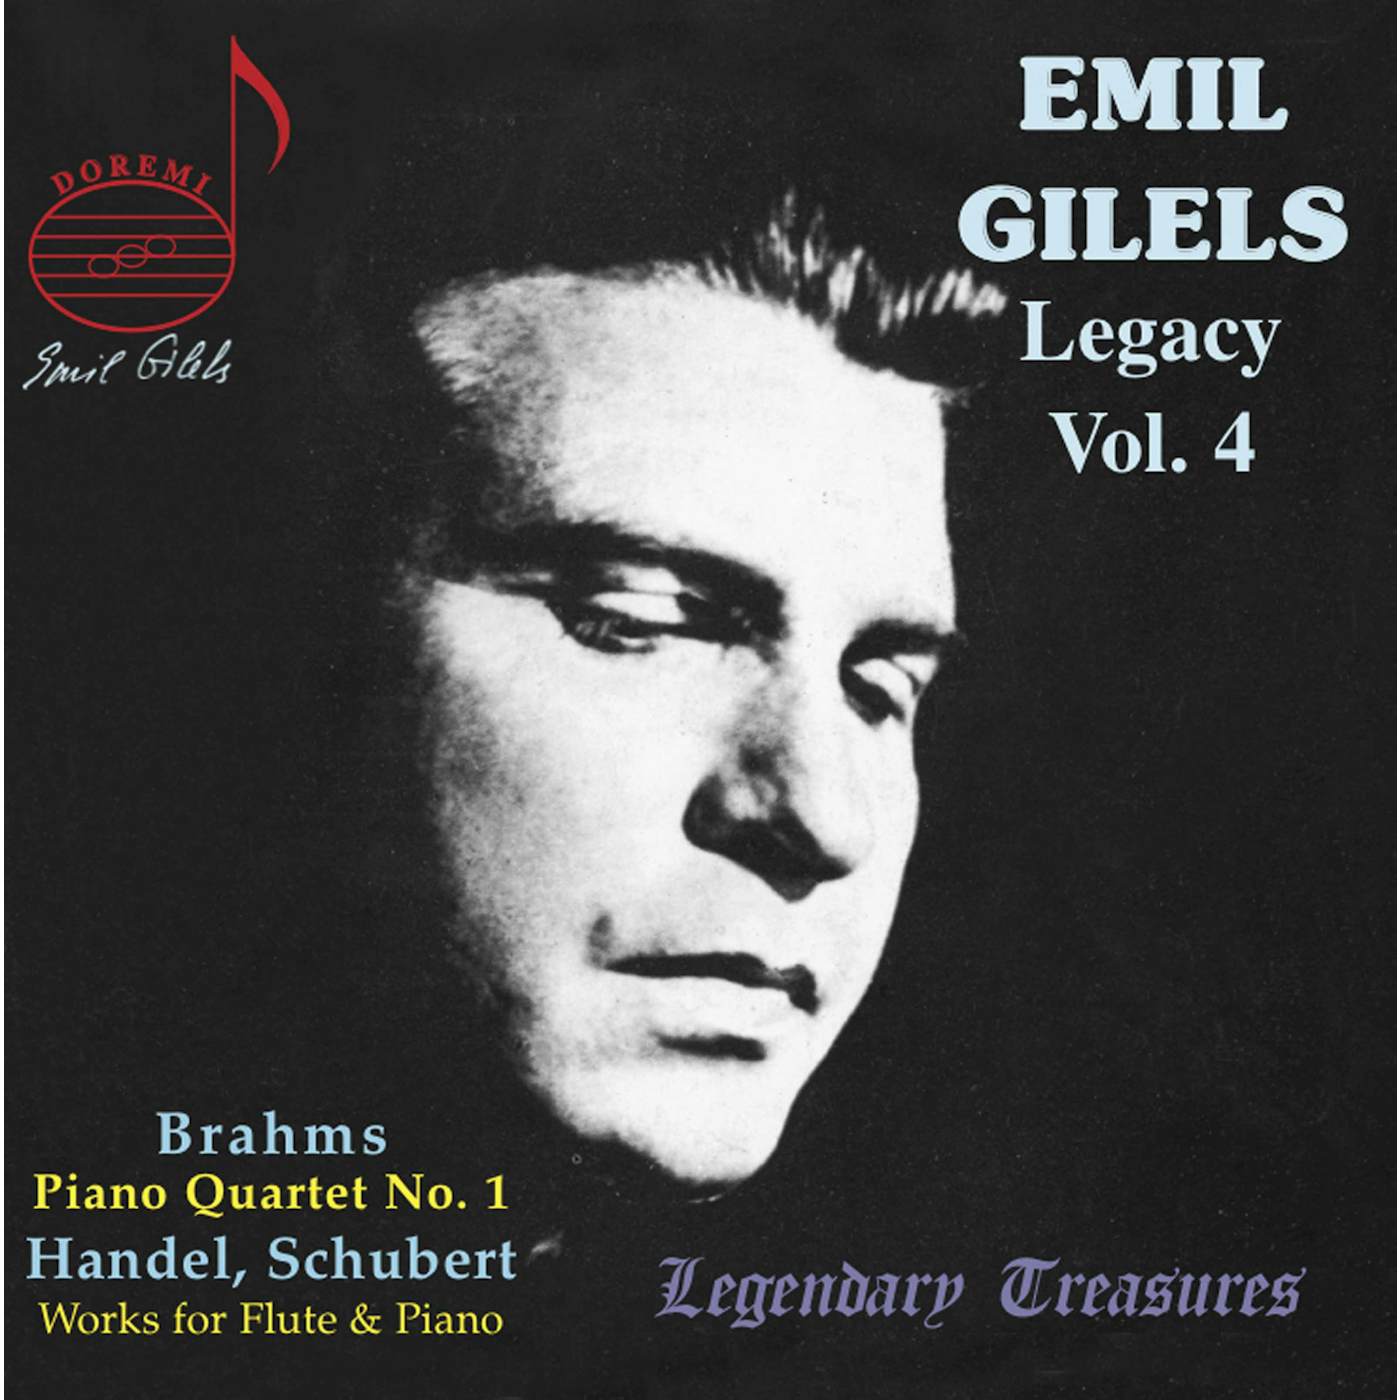 Emil Gilels LEGACY 4 CD